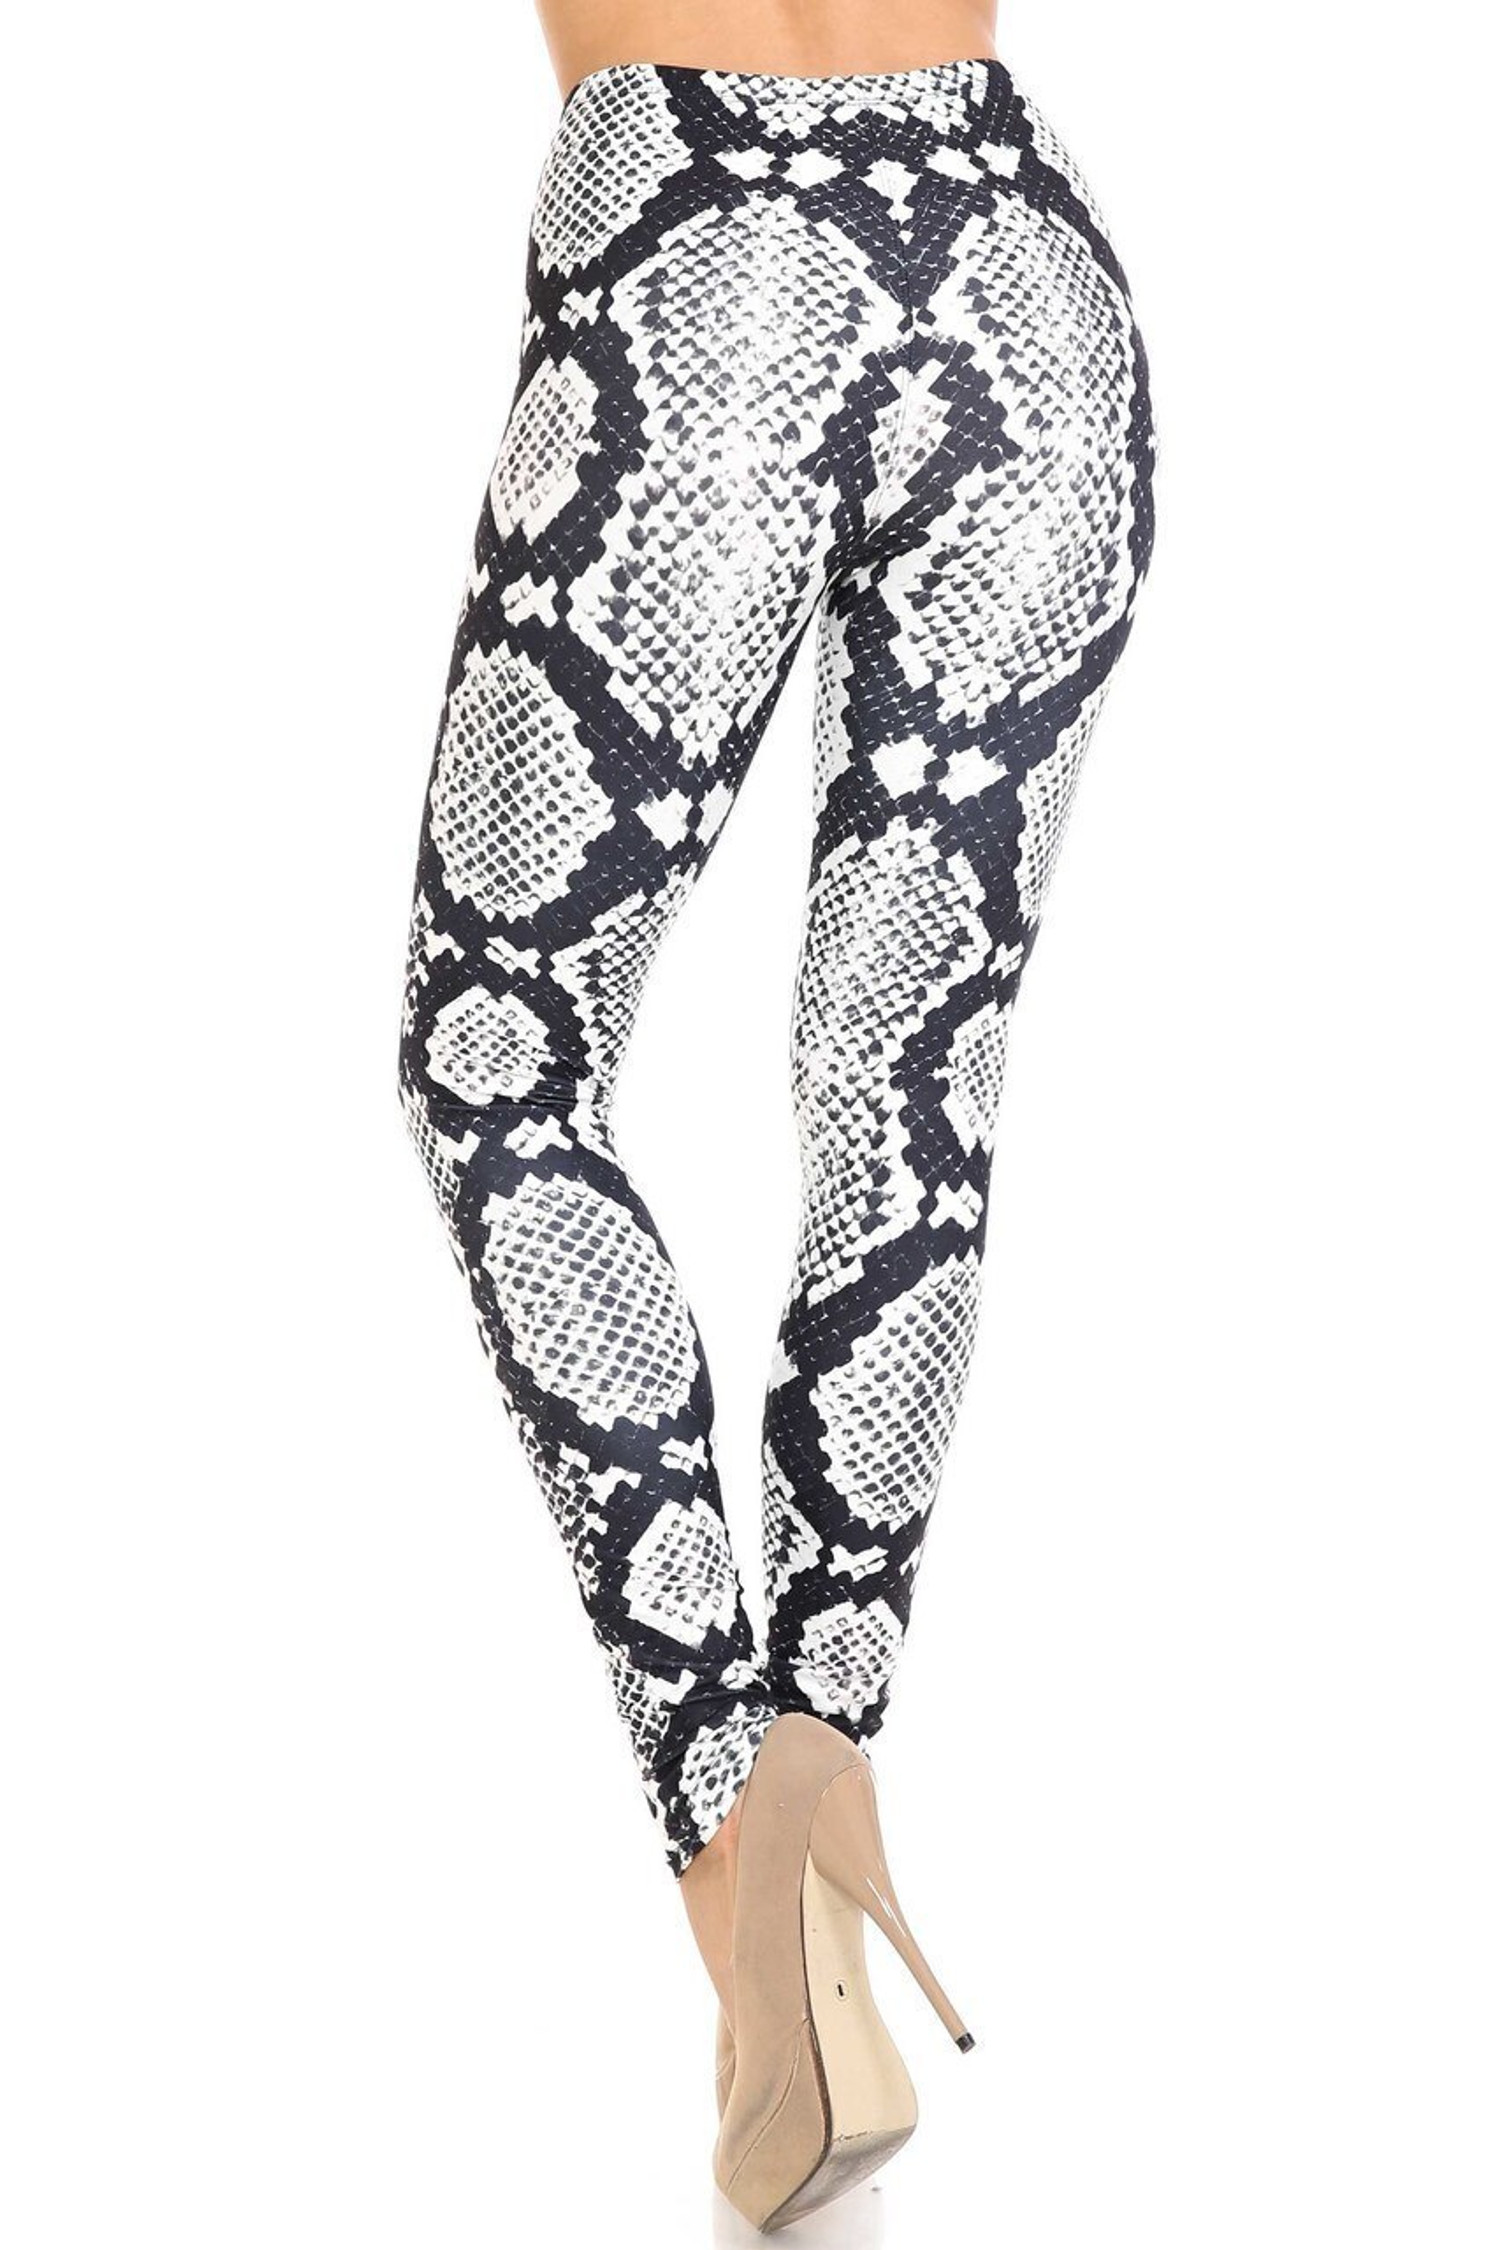 Creamy Soft Black and White Python Snakeskin Extra Plus Size Leggings - 3X-5X - By USA Fashion™